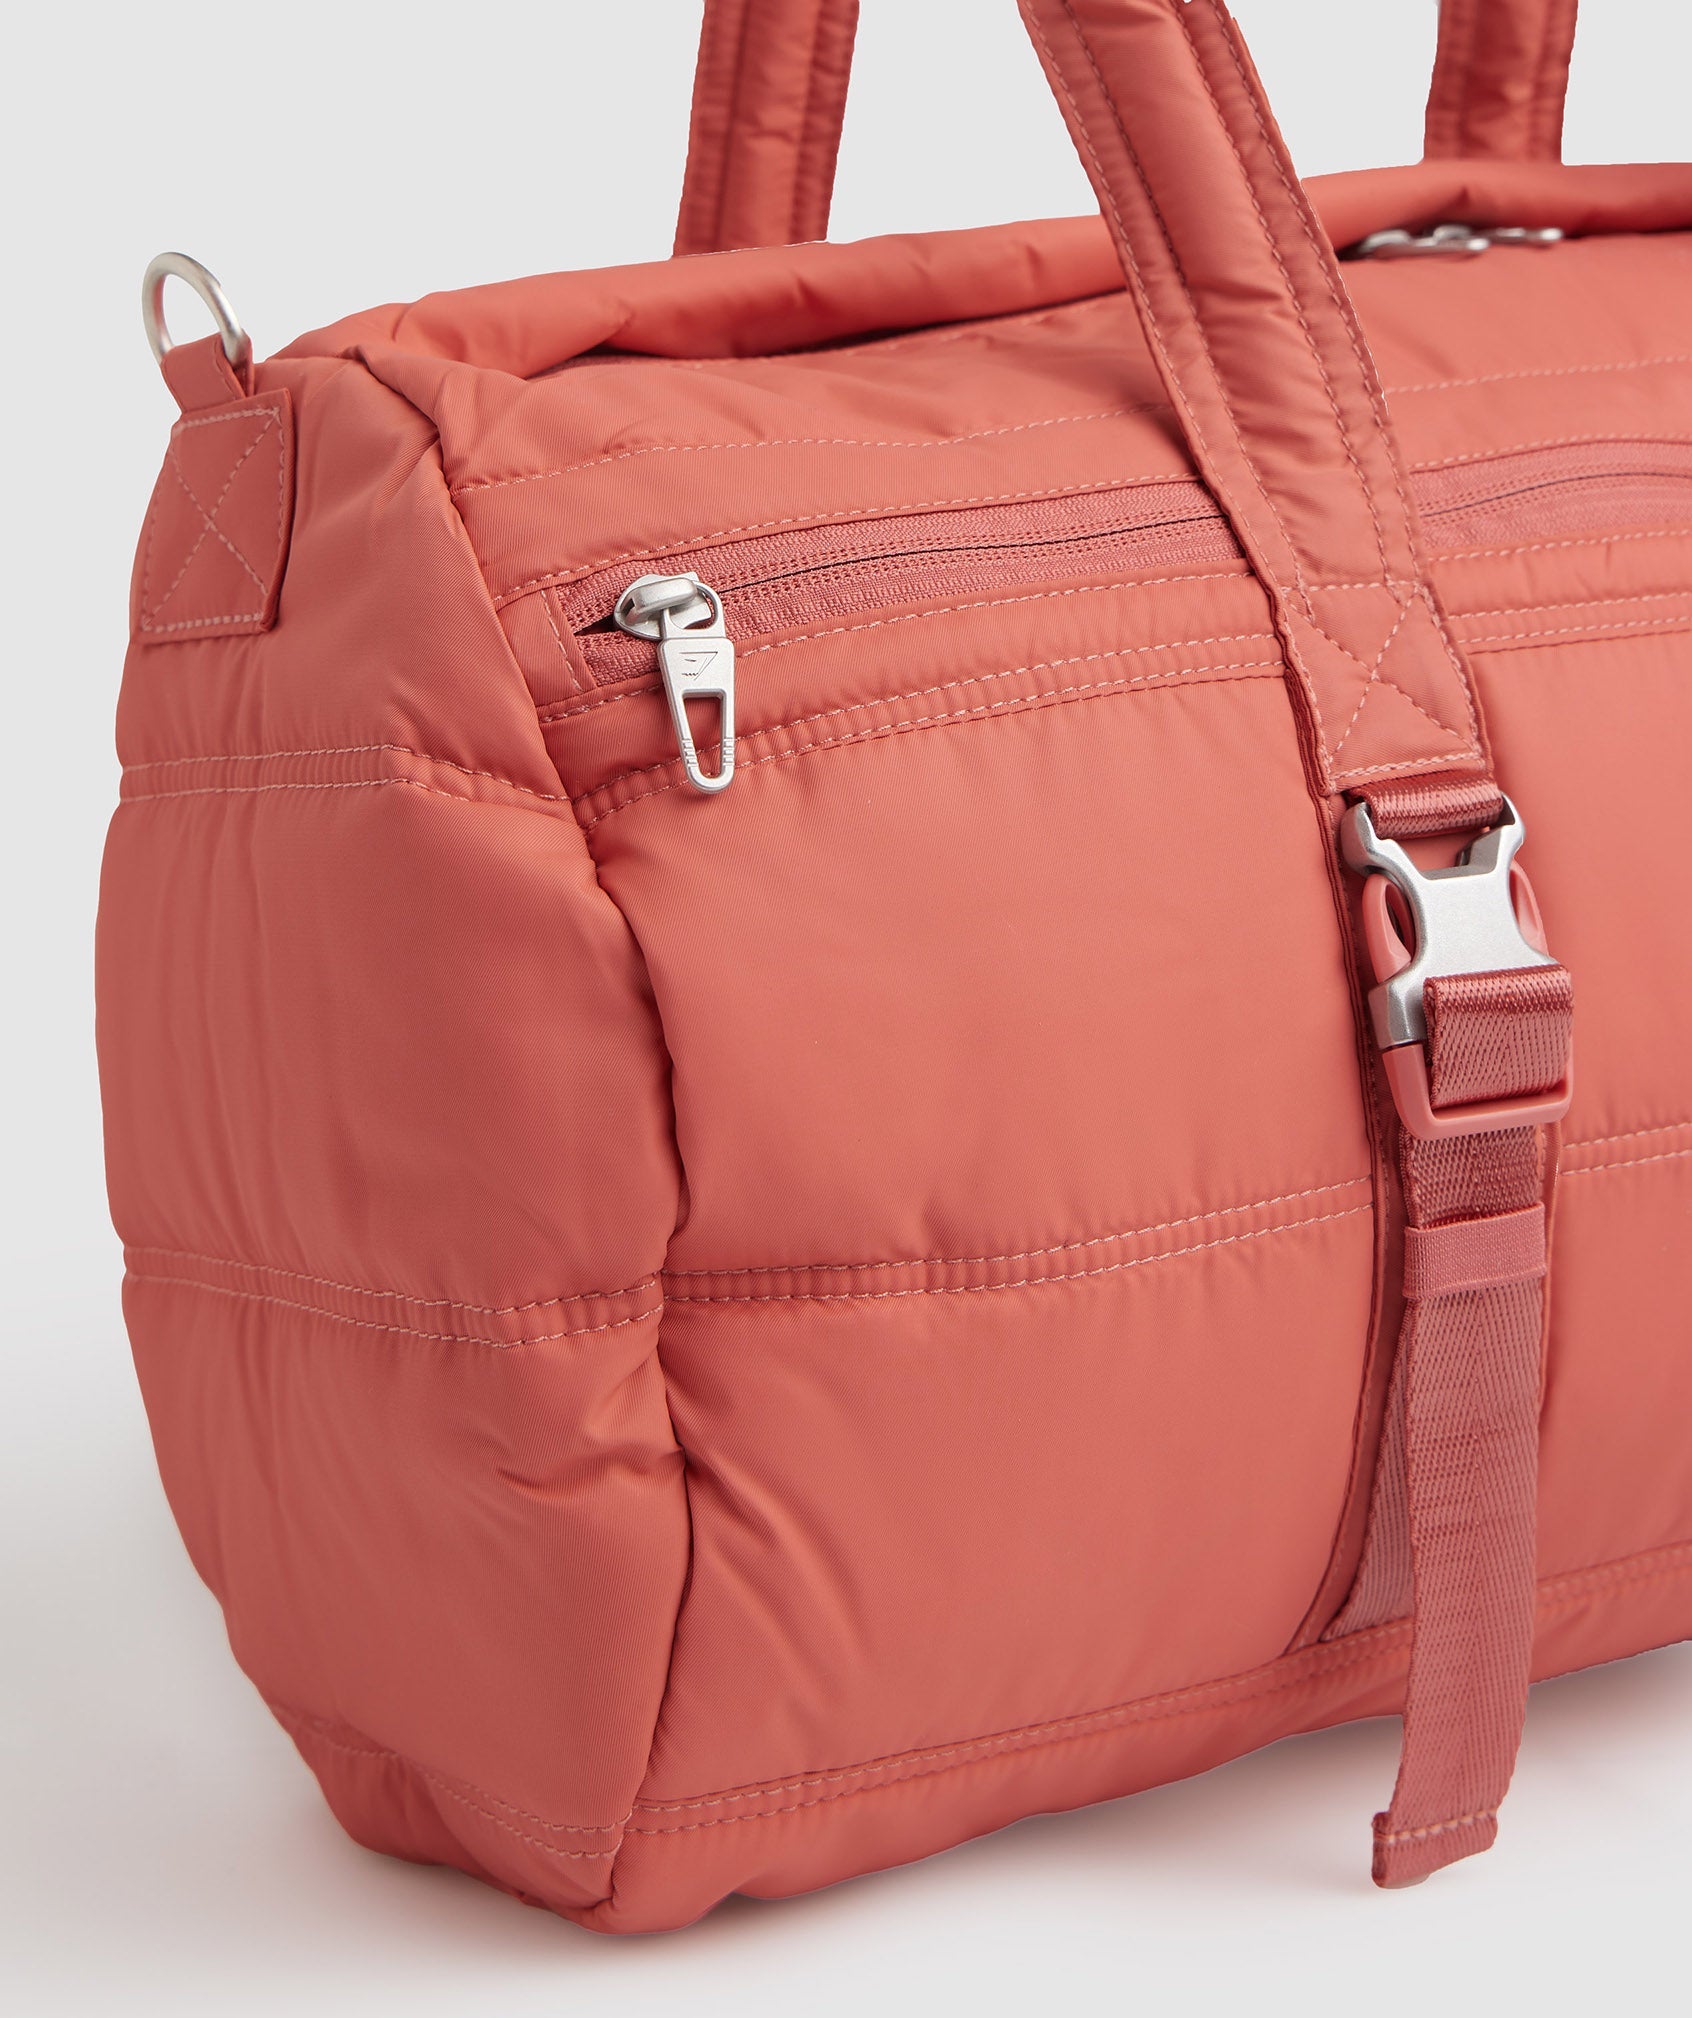 Premium Lifestyle Barrel Bag in Terracotta Pink - view 2